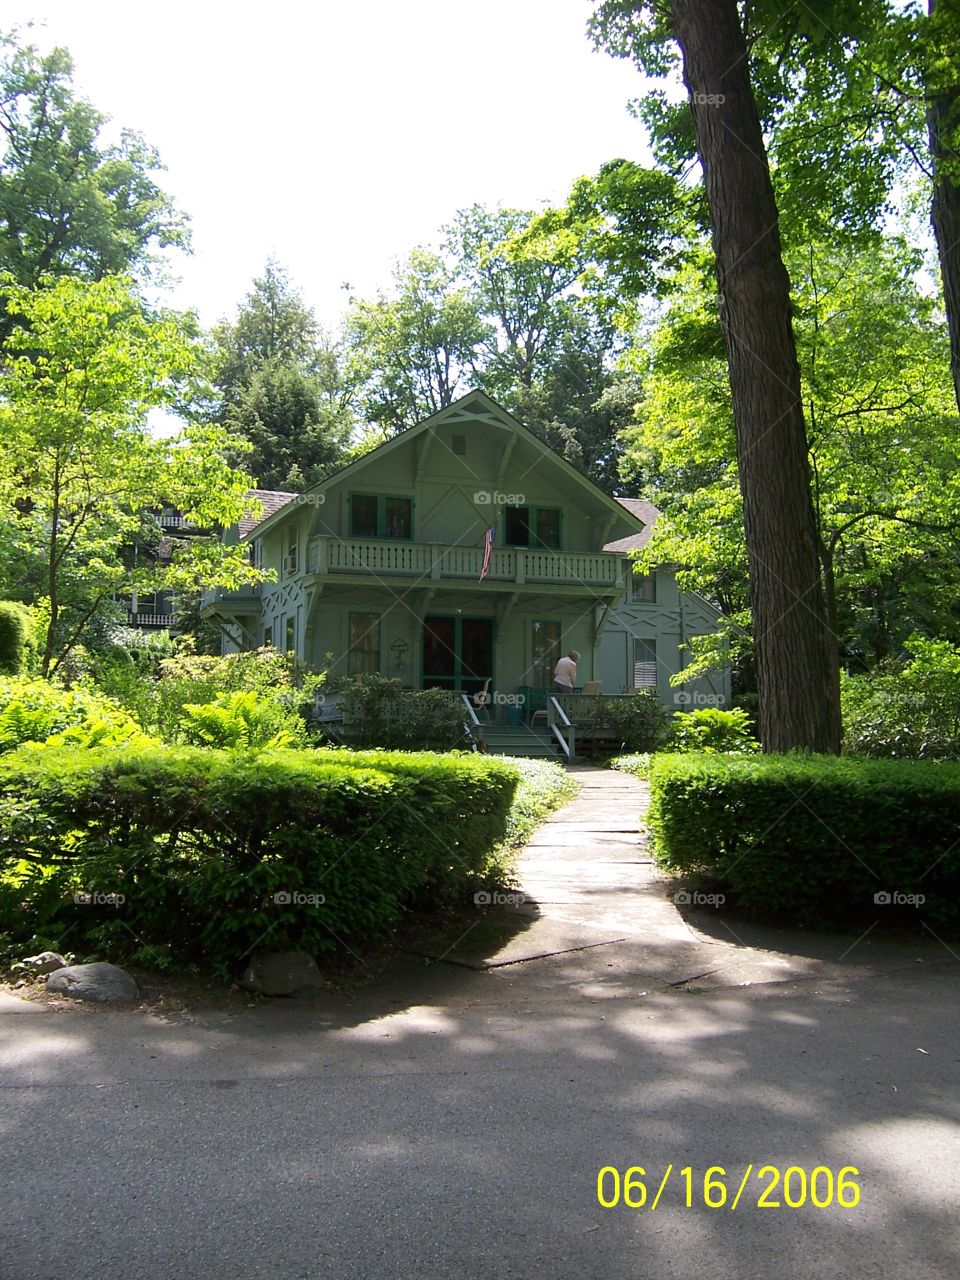 The Miller Cottage in Chautauqua, New York